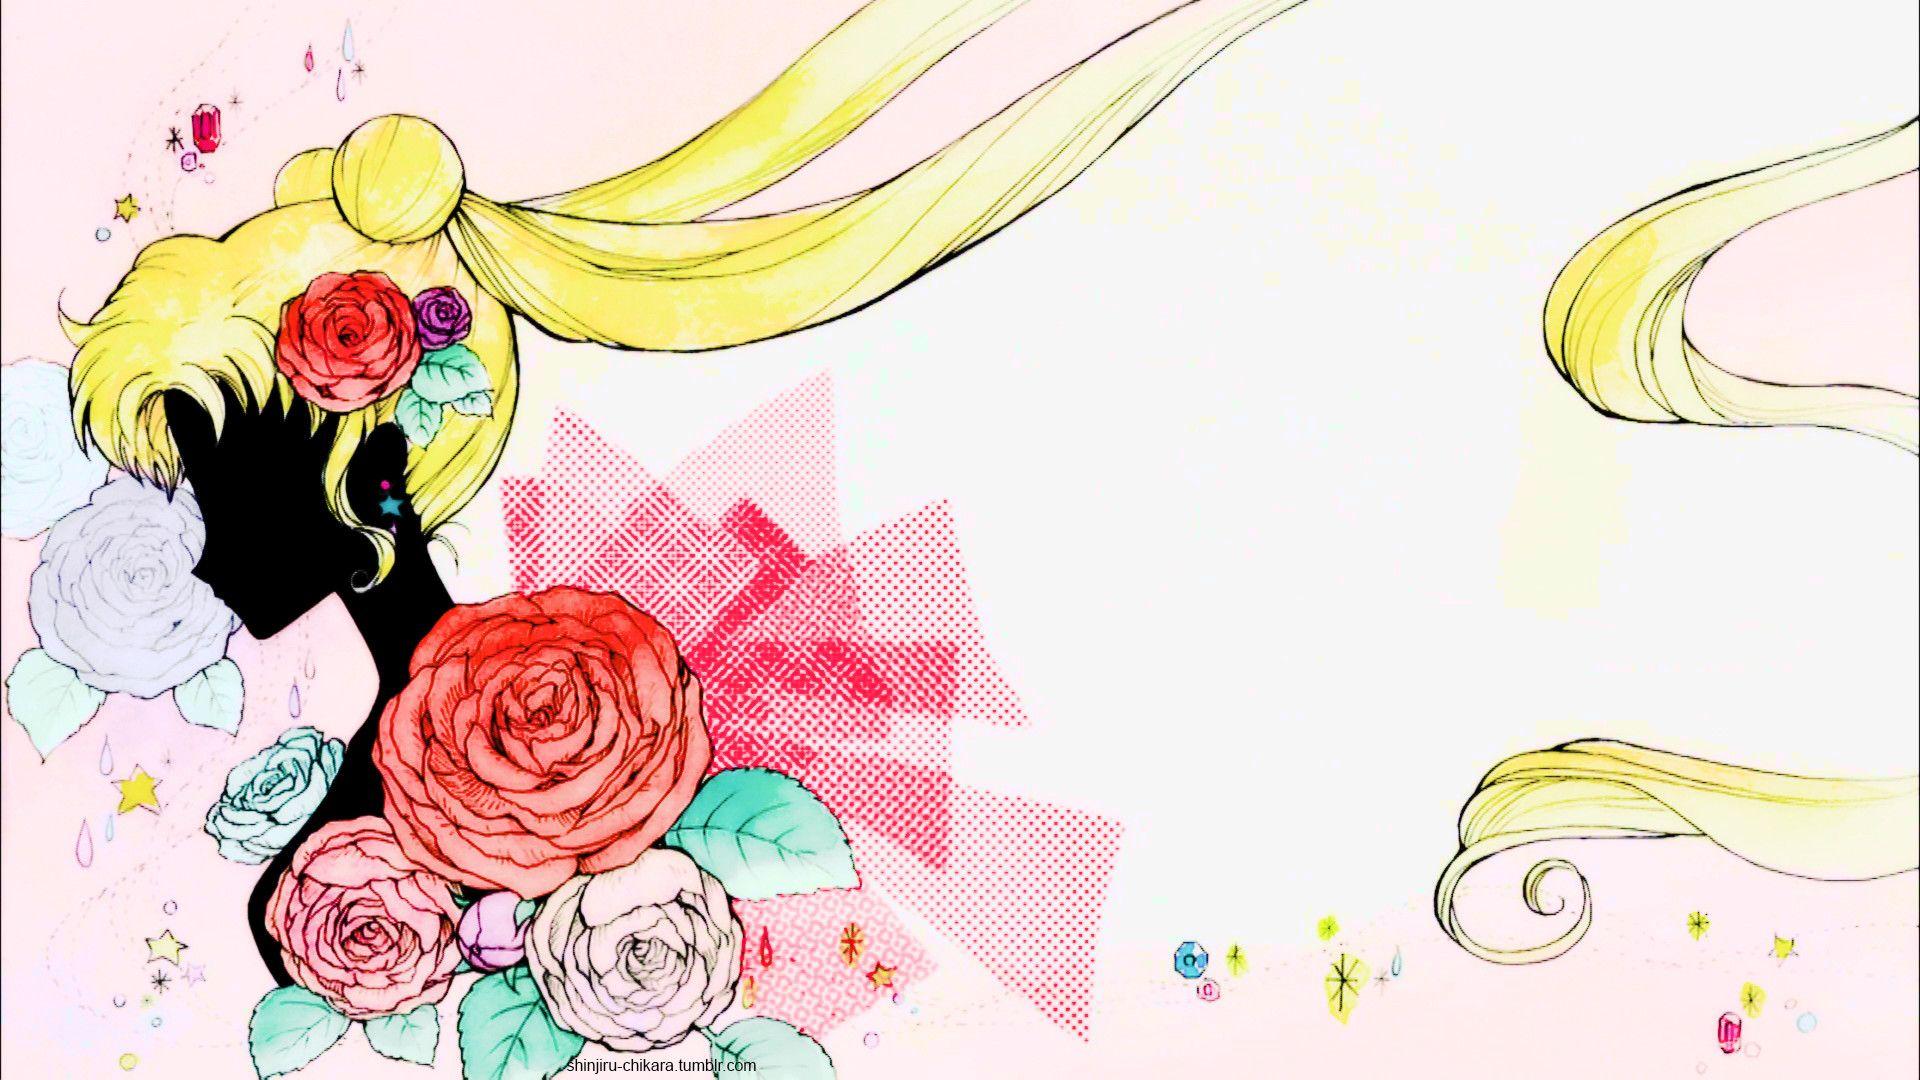 Sailor Moon Aesthetic Desktop Wallpapers - Top Free Sailor Moon